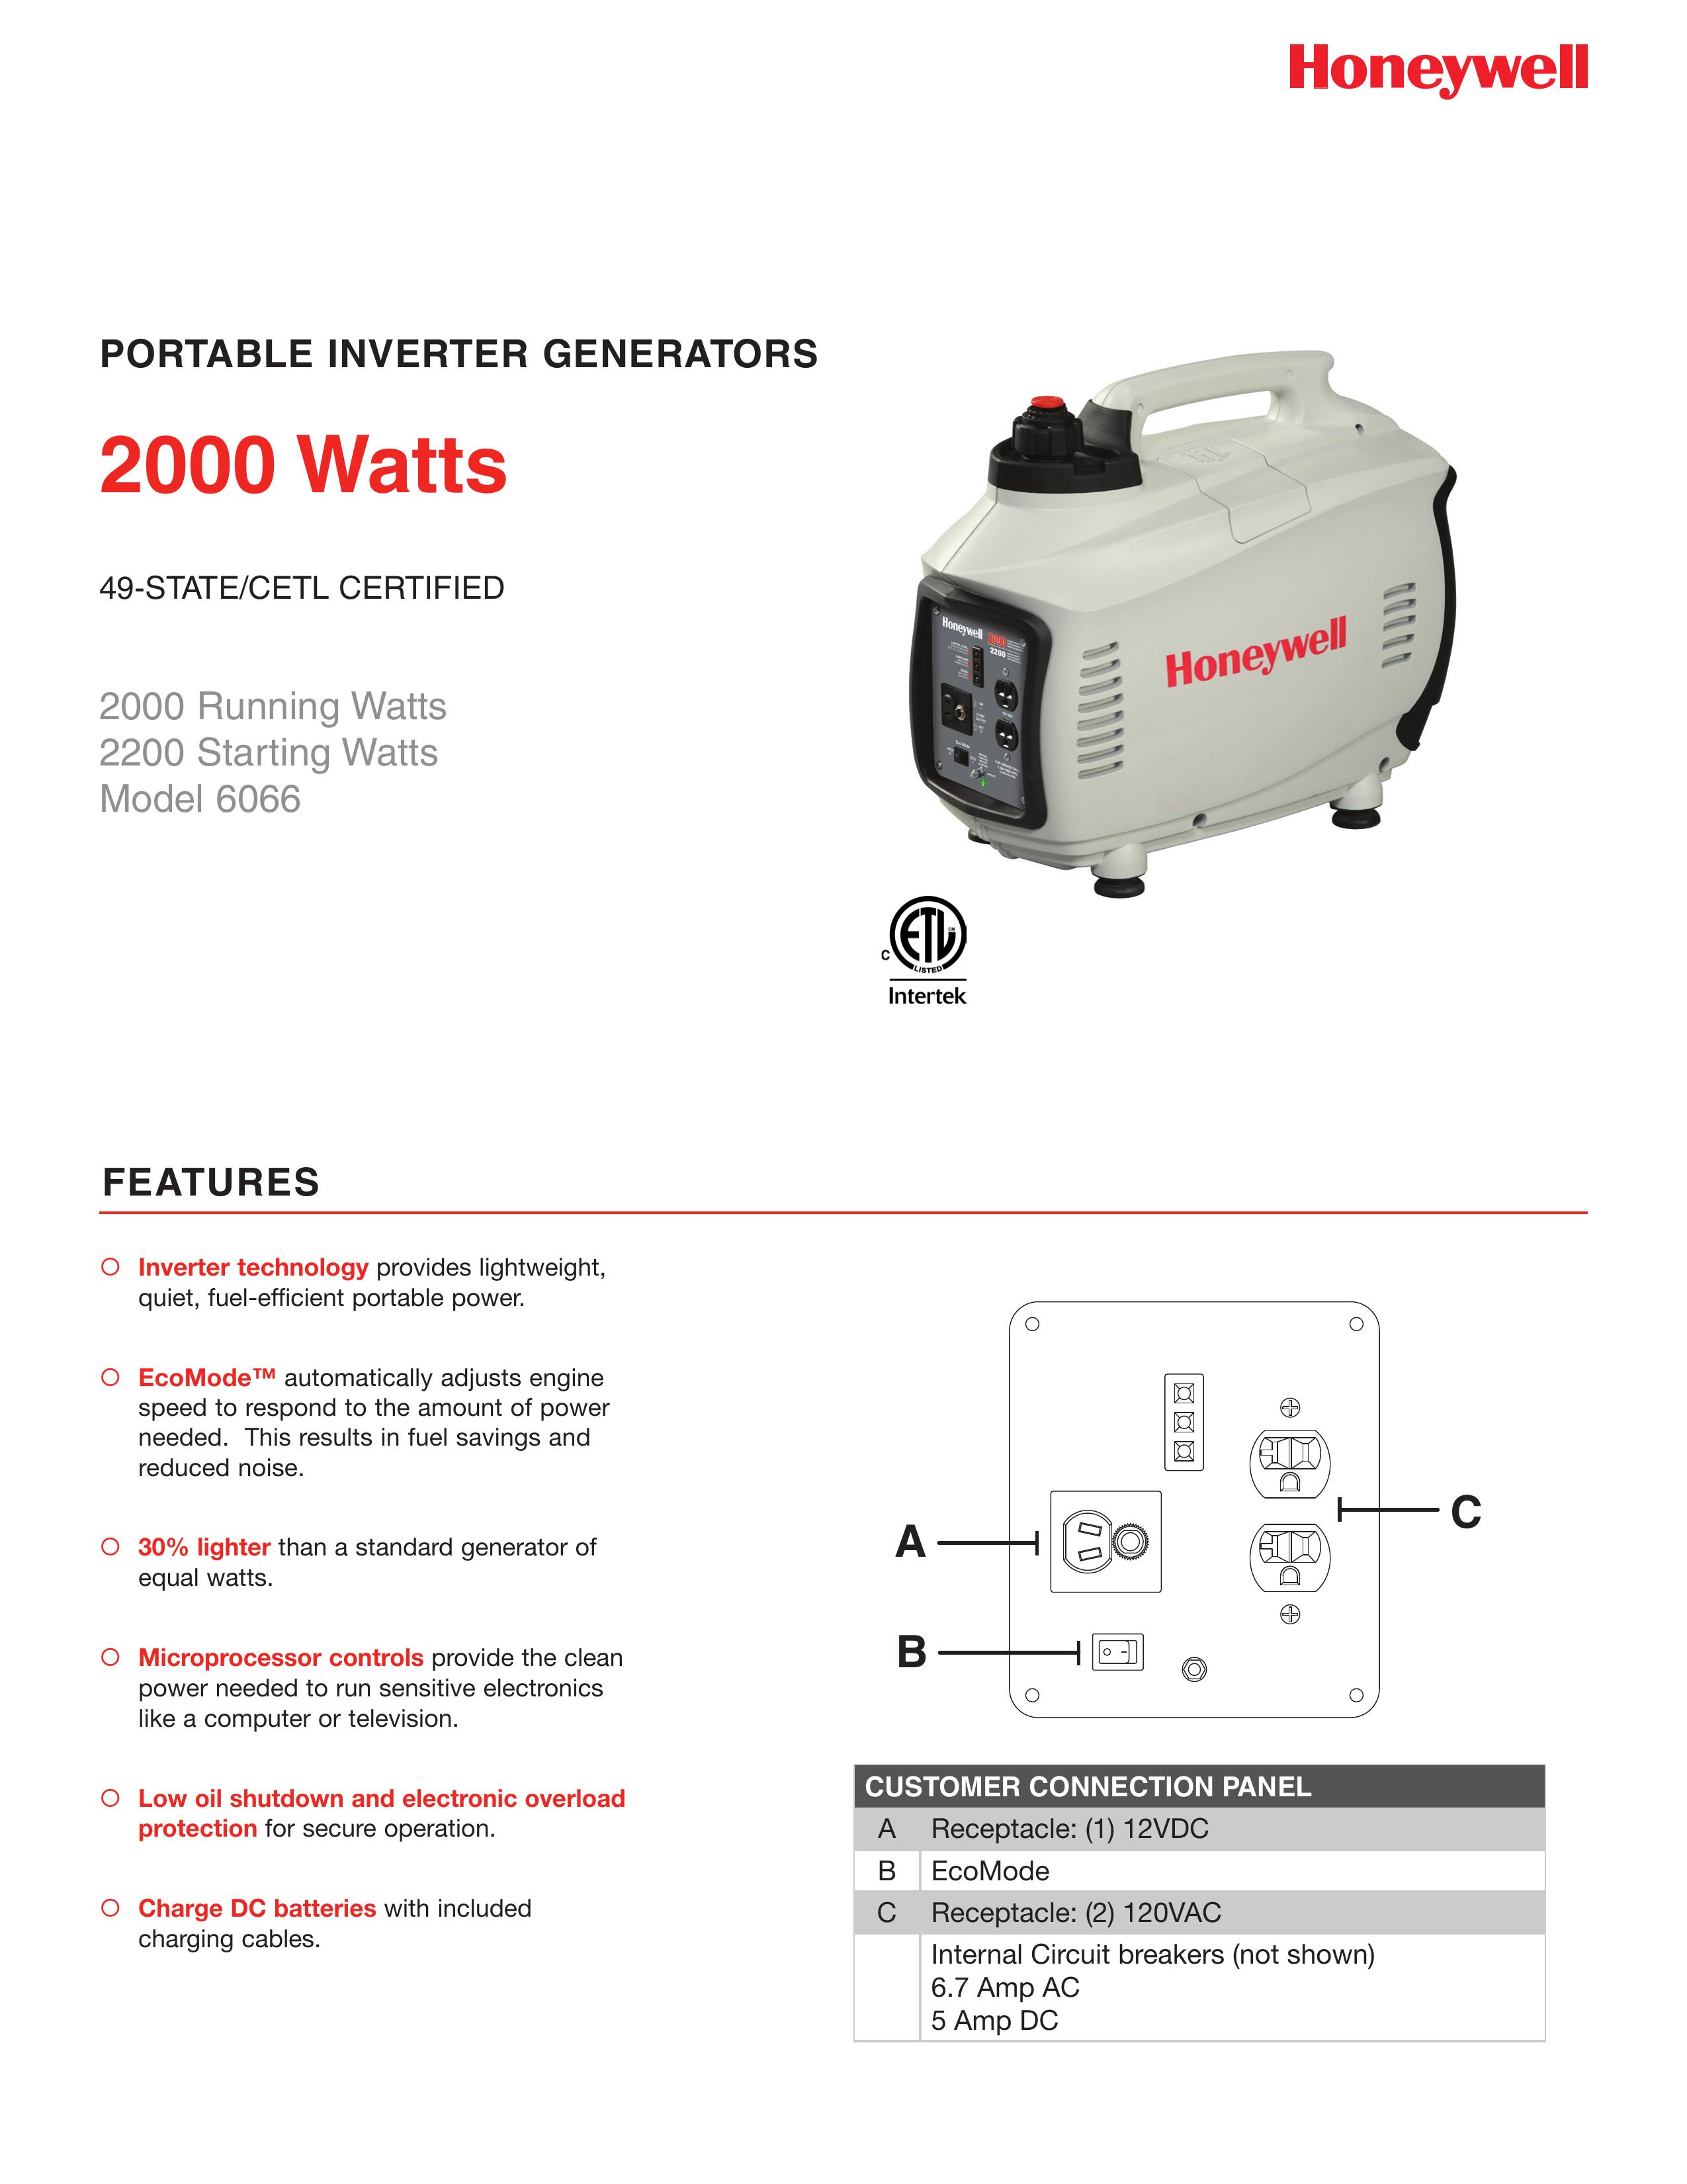 Honeywell 6066 Portable Generator User Manual